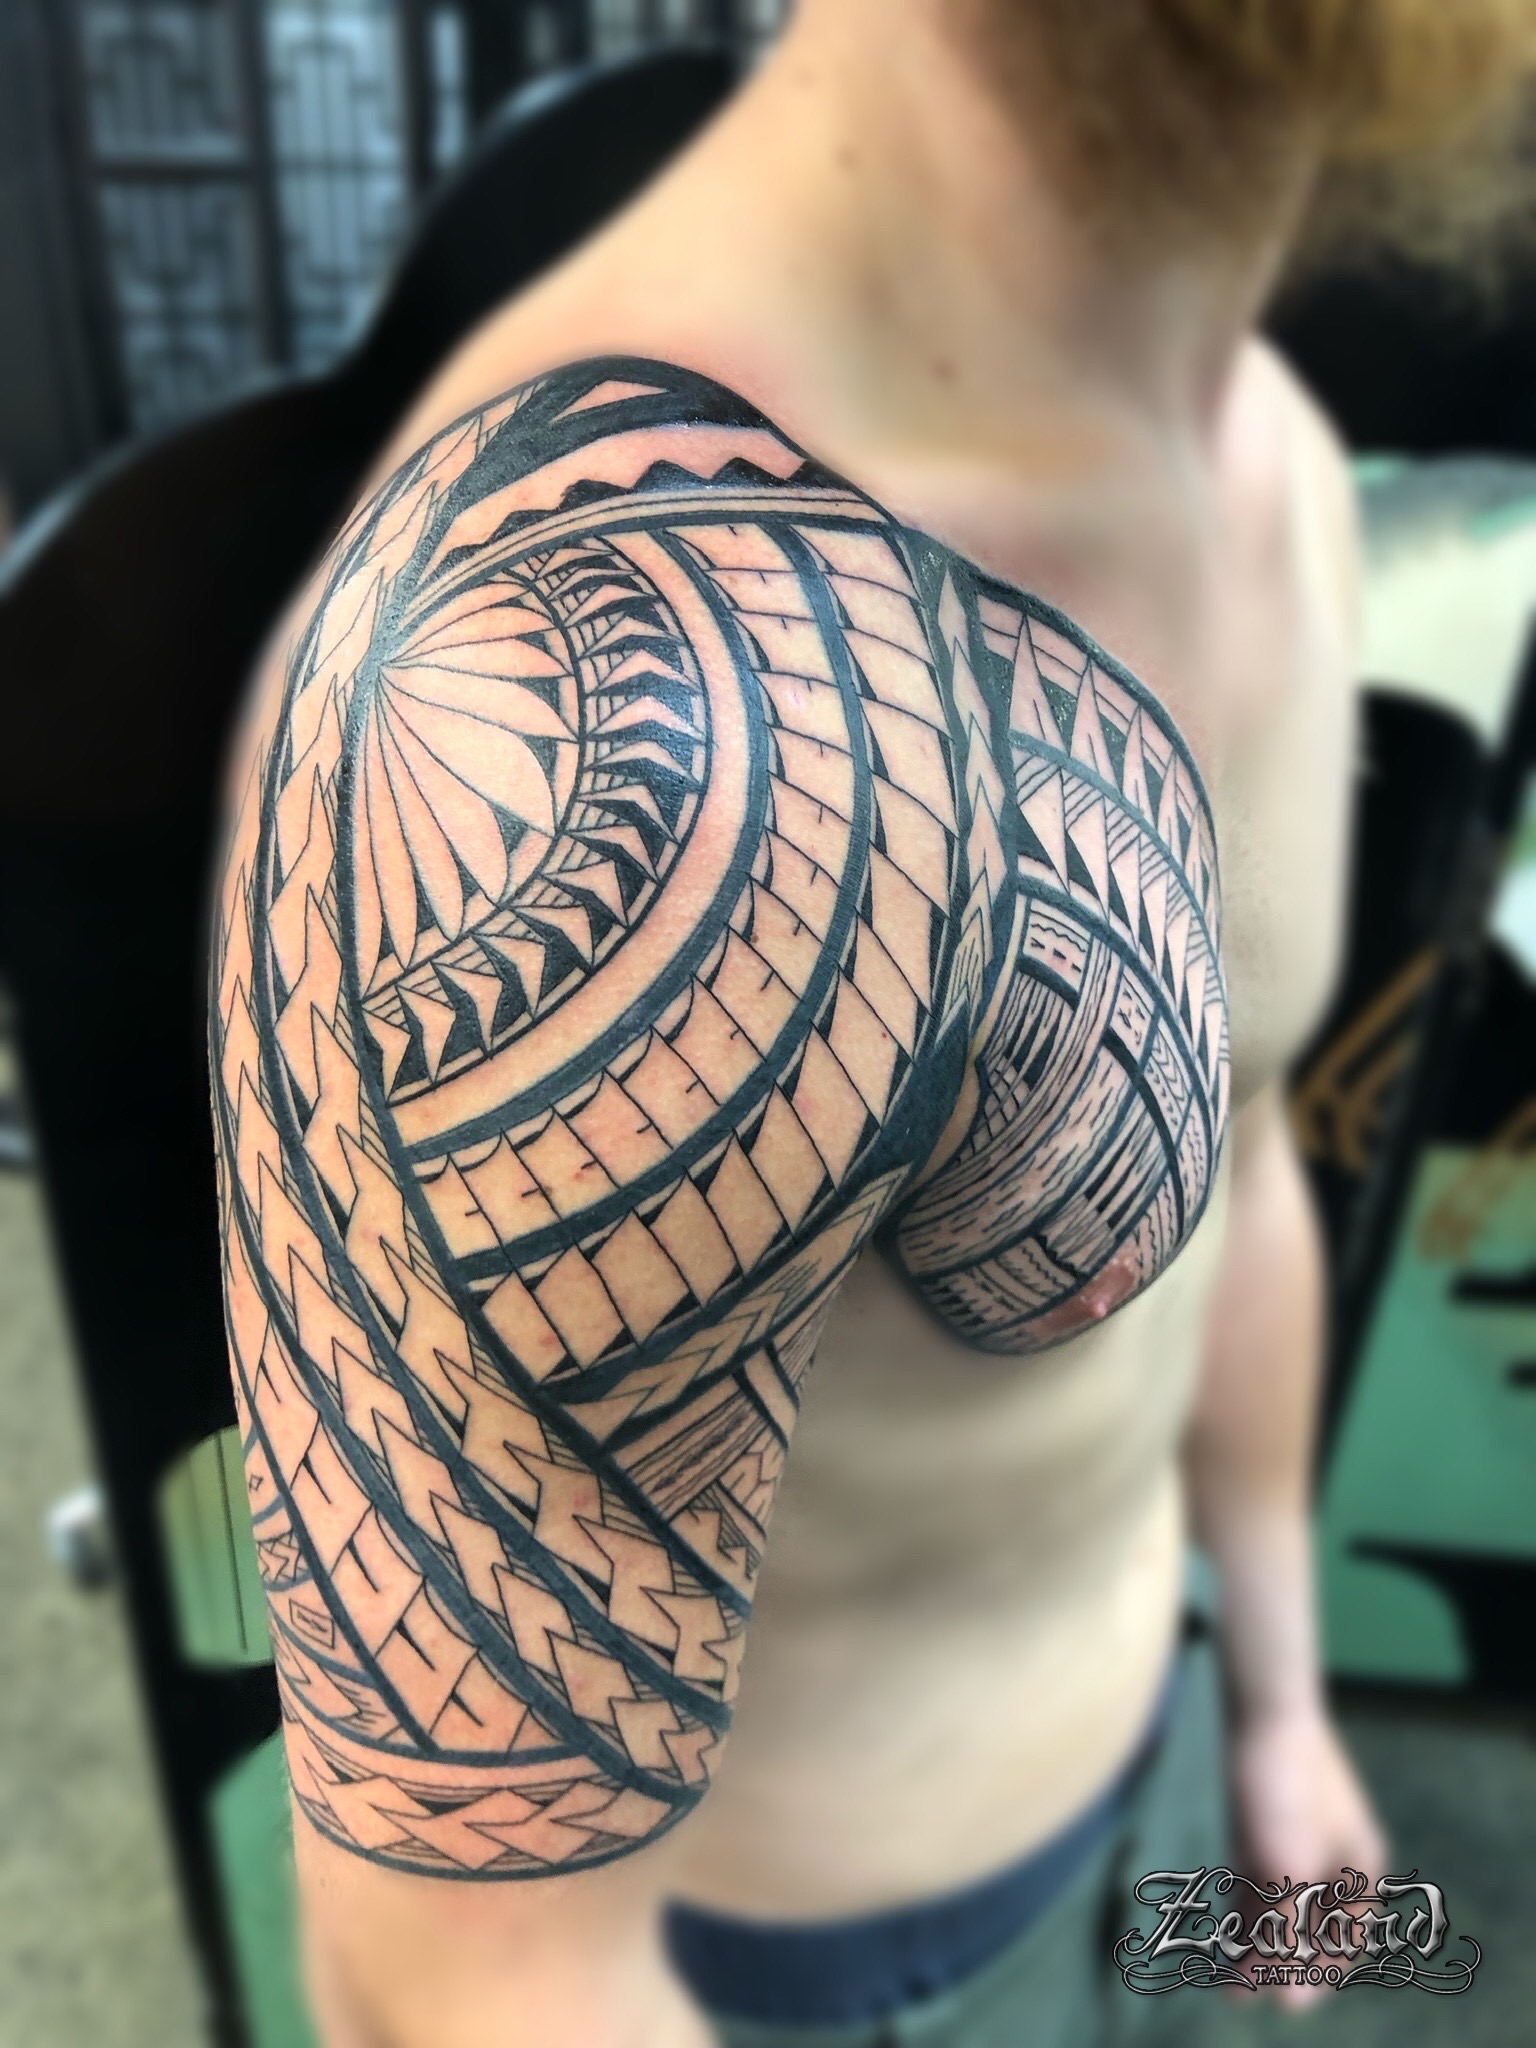 Polynesian armband tattoo by... - Skin Machine Tattoo Studio | Facebook